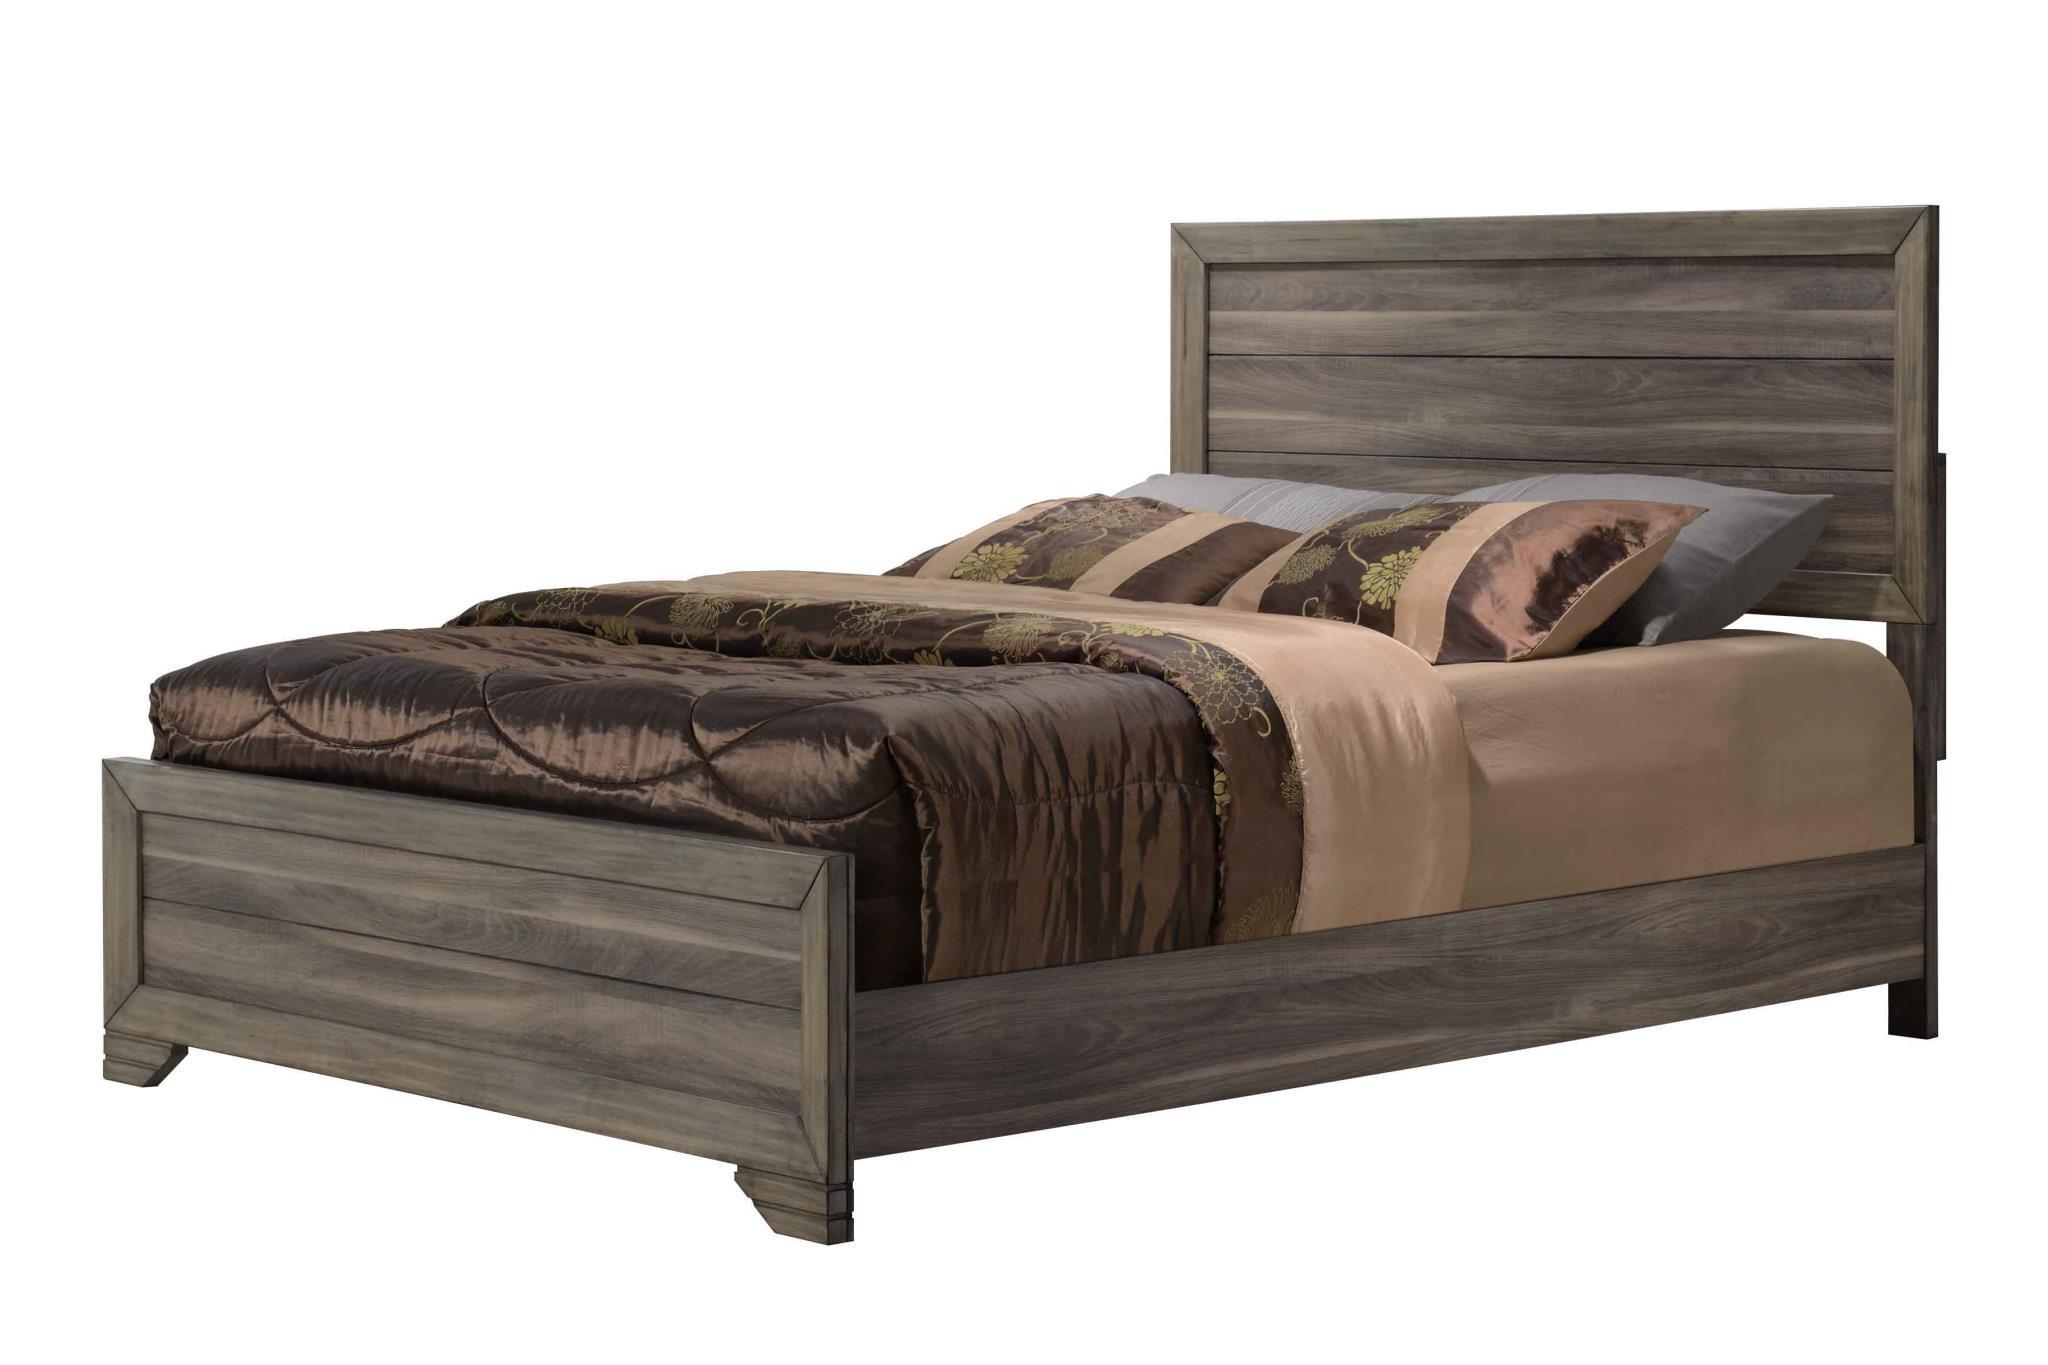 

    
Driftwood 1650 Queen Bedroom Set 4Pcs Asheville Bernards Solid Wood Contemporary
